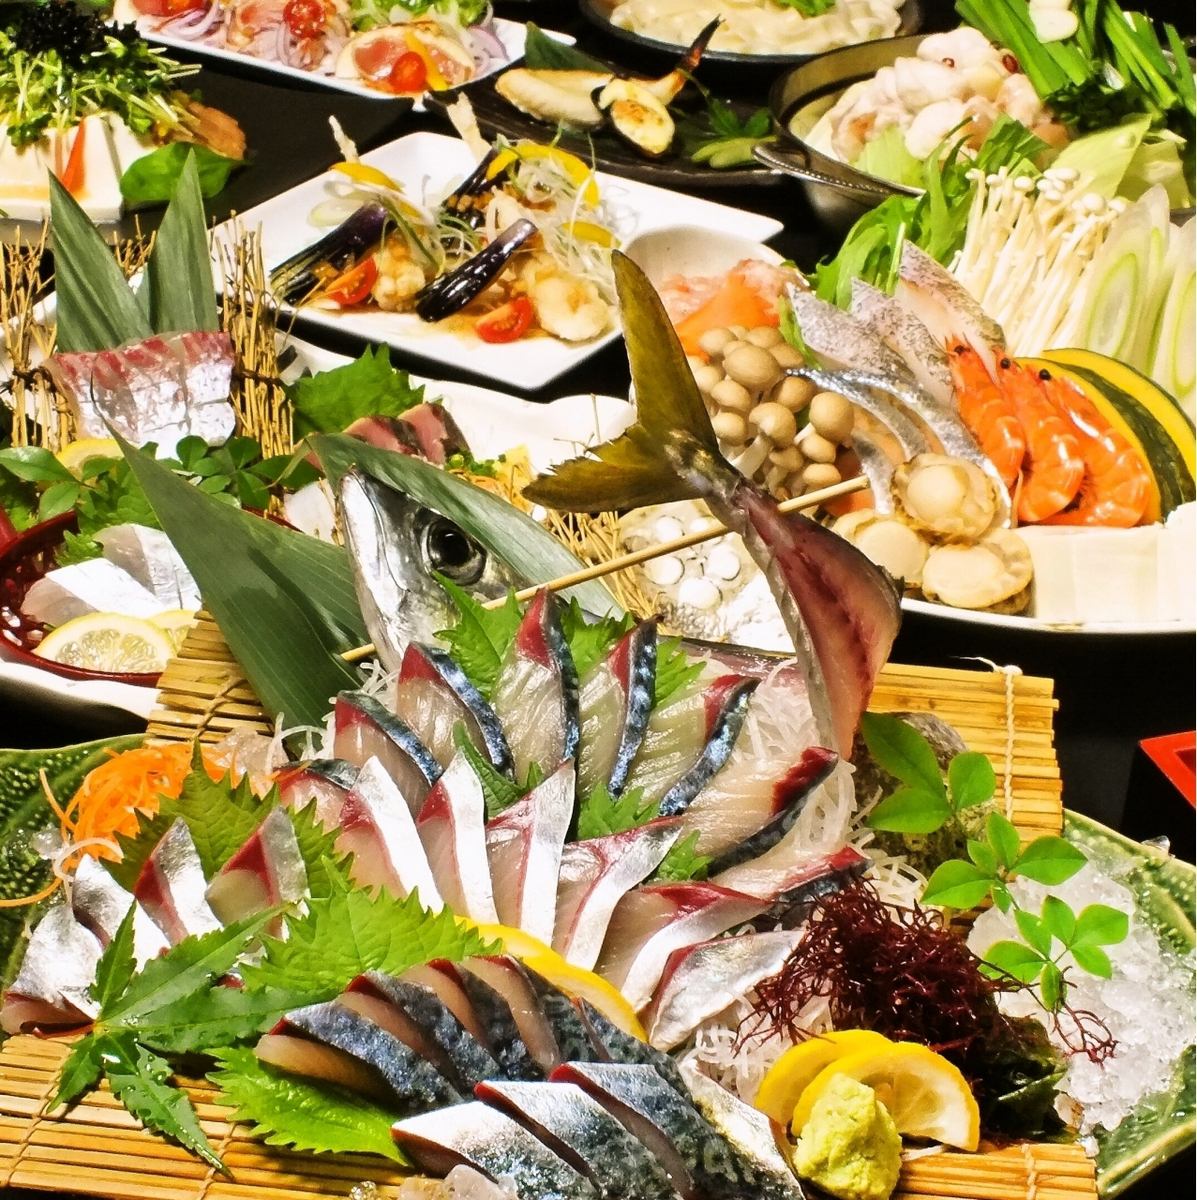 Immediately after Hakata! A seafood izakaya where you can enjoy fresh fish!